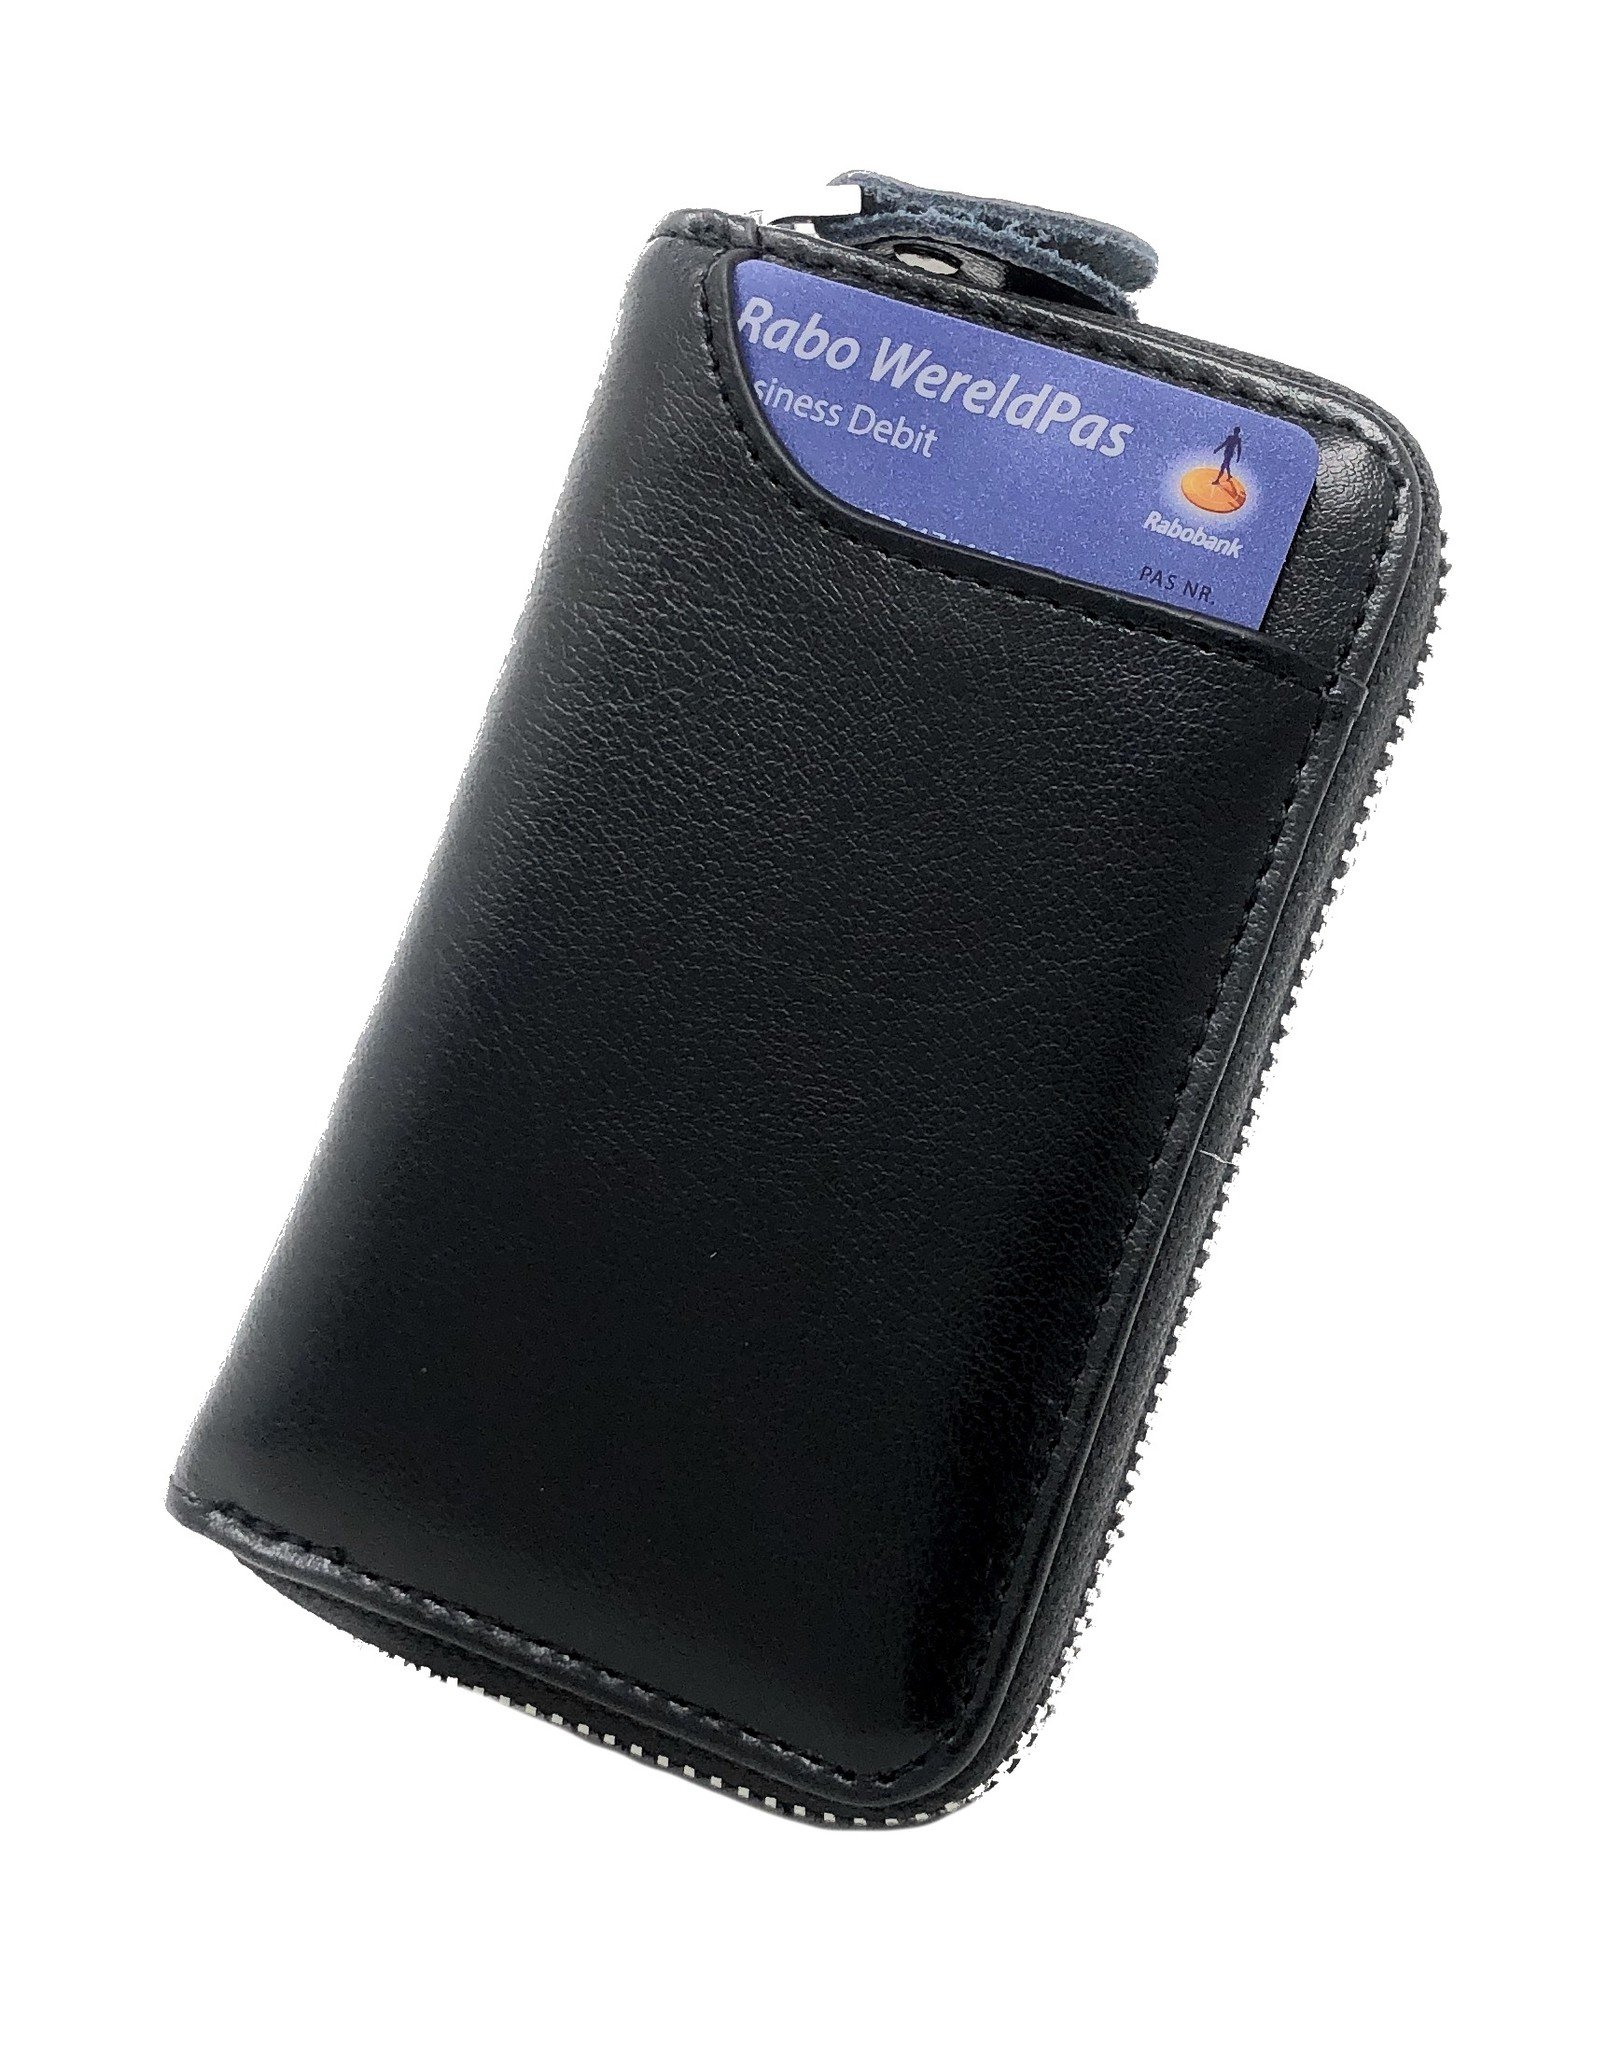 Leather Key Case, 6 Key Hooks, Card Holder, Bank Notes Wallet, Car Key Pocket, Multifunctional Key Organizer - Black-2